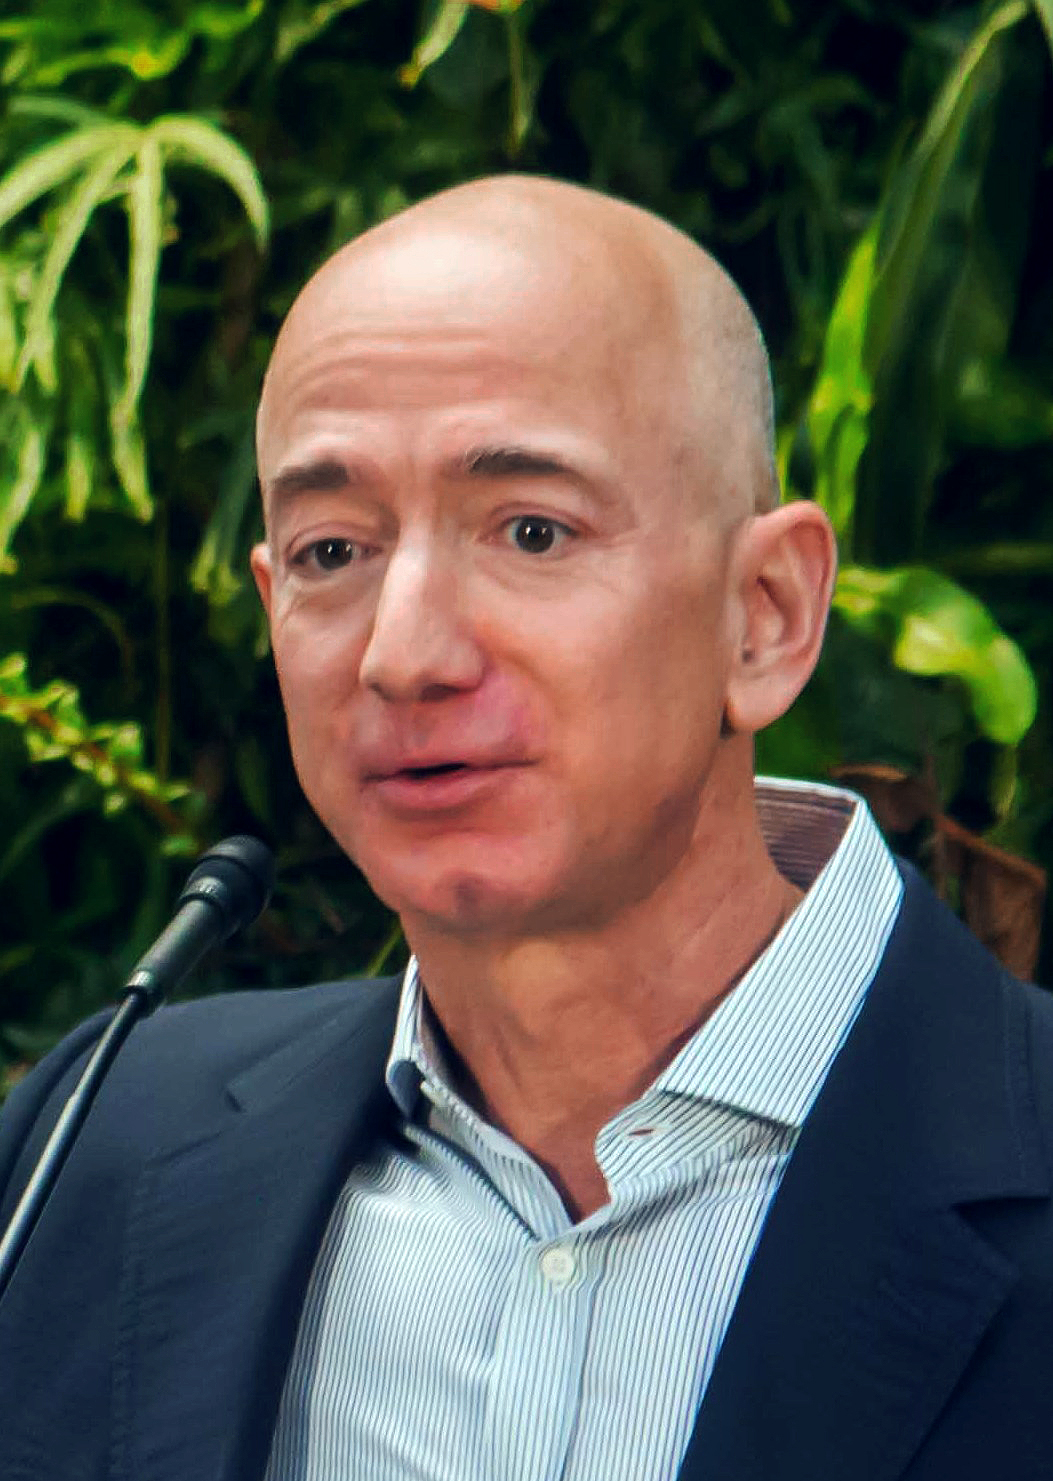 FACTBOX-Jeff Bezos' journey from suburban garage to edge of space